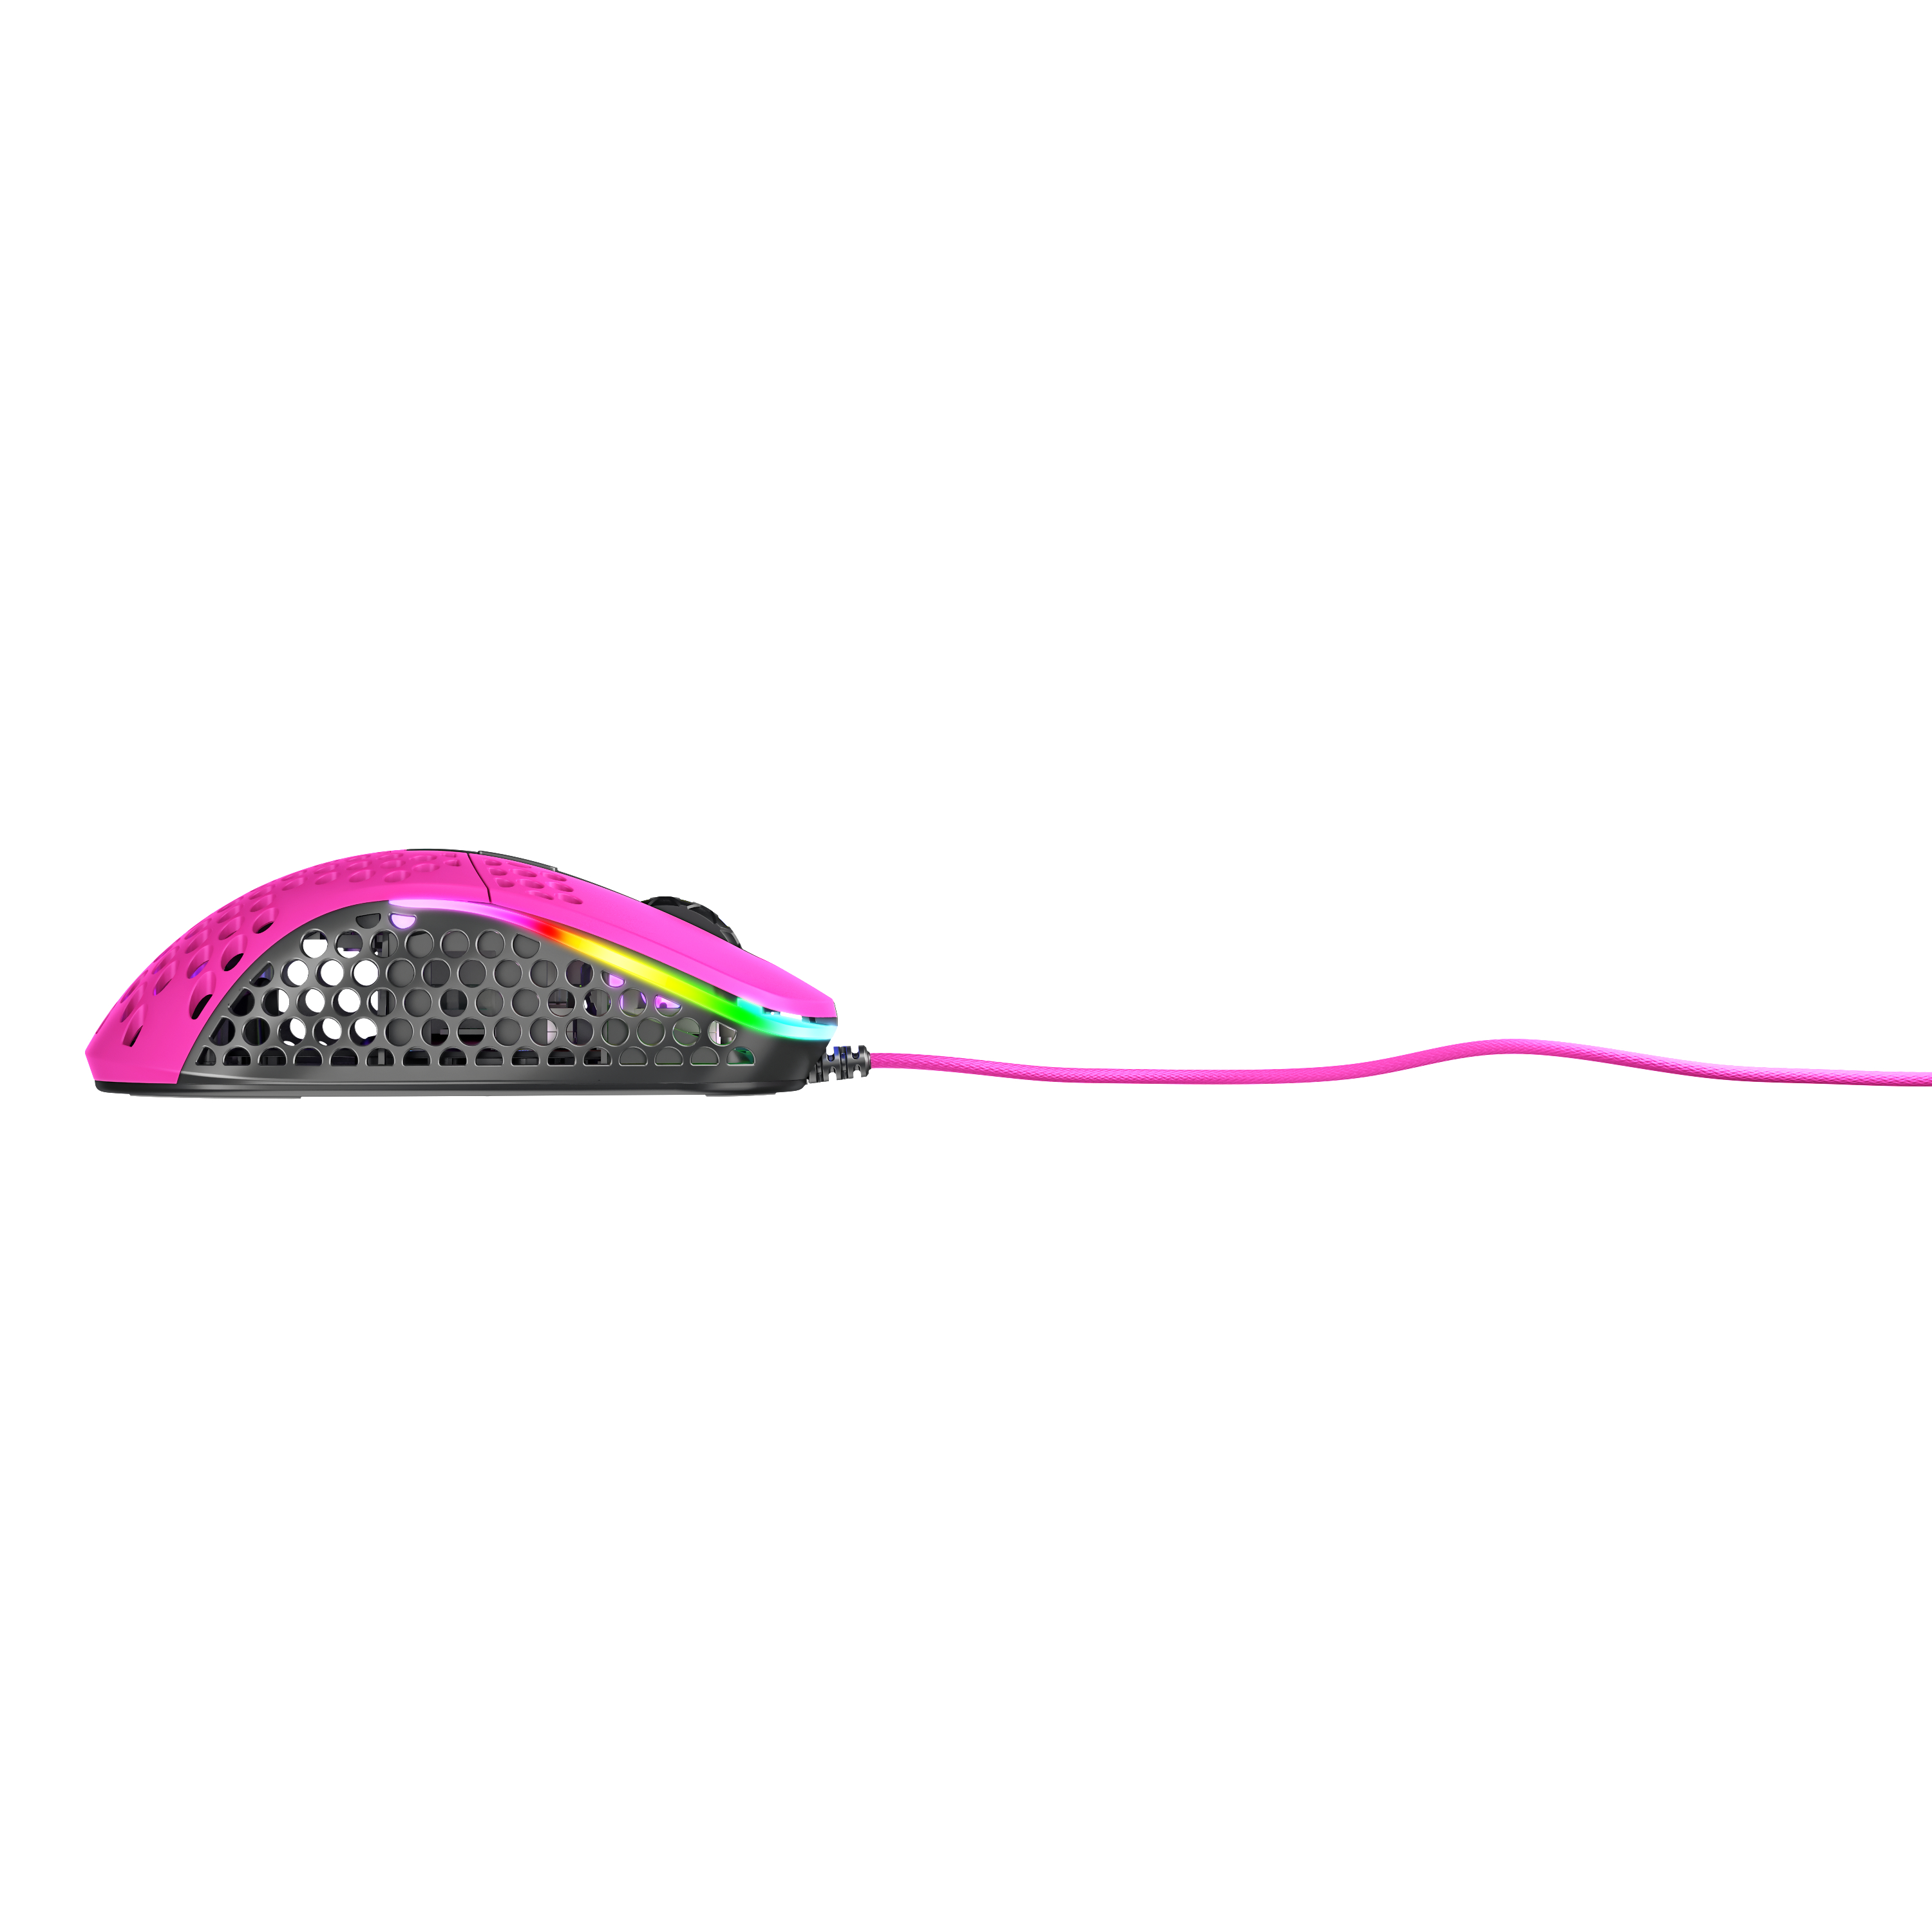 M4 RGB Maus, XTRFY Pink CHERRY Gaming